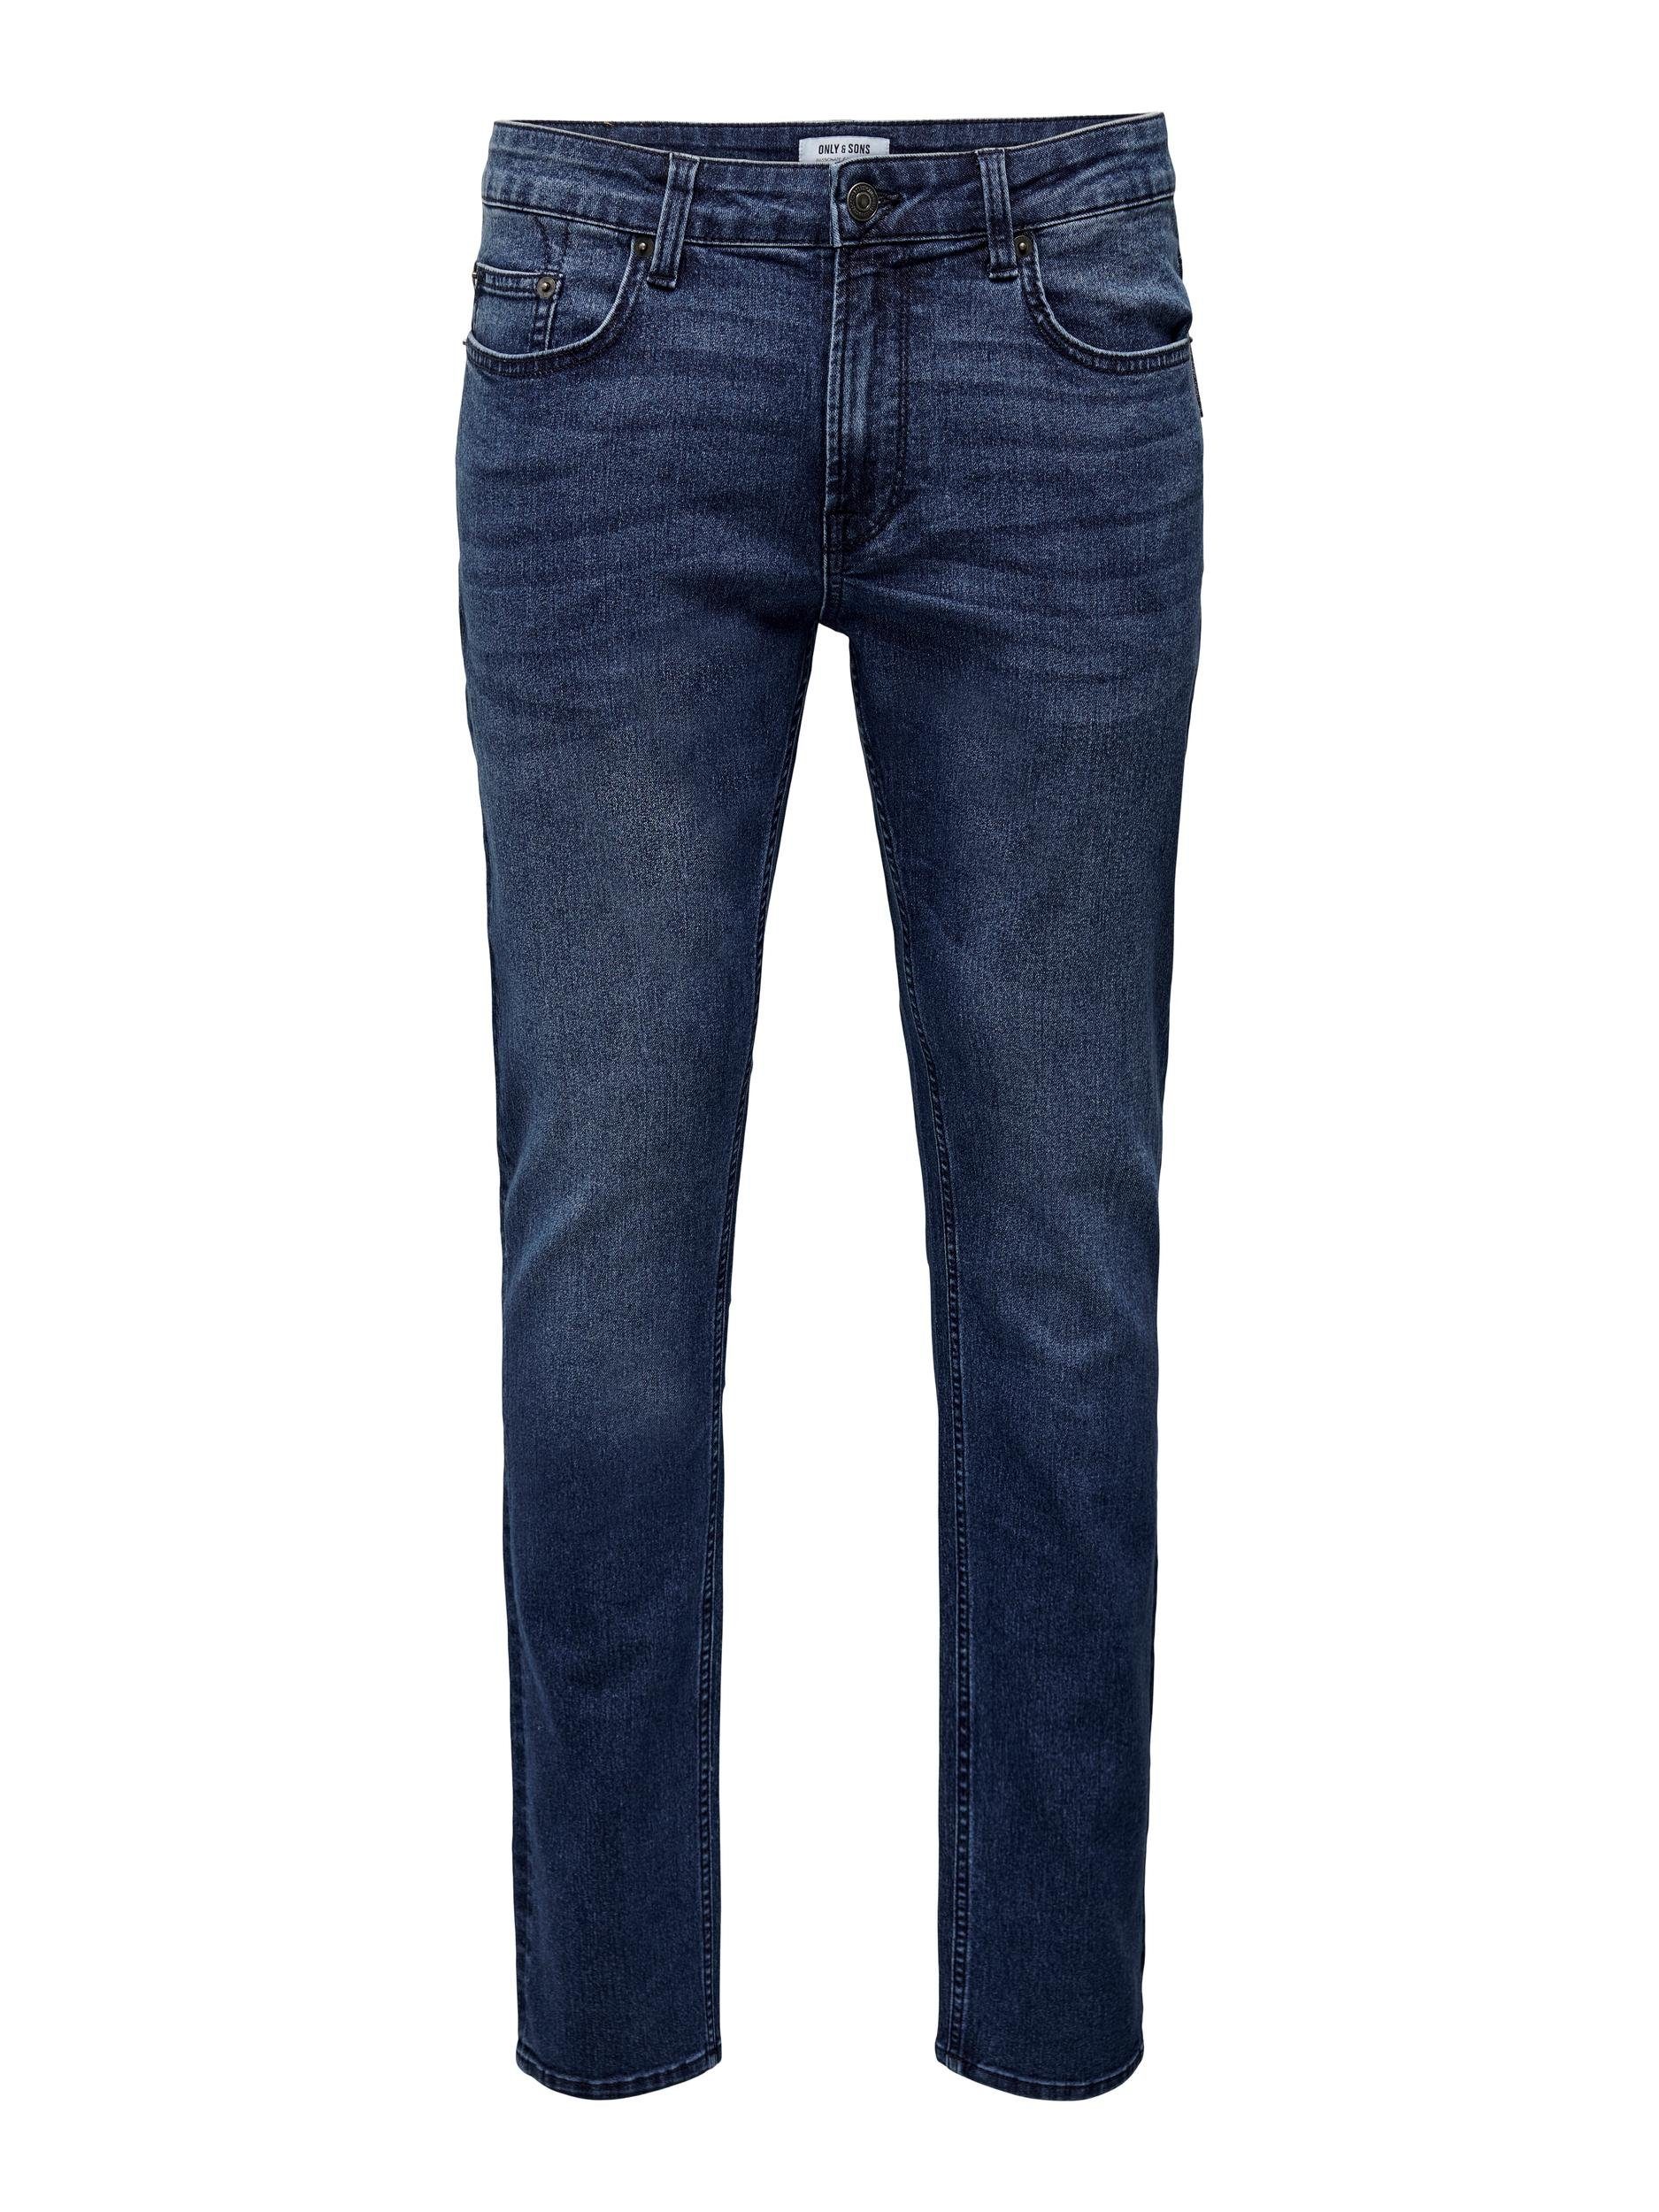 VD ONSWEFT Denim JEANS SONS Slim-fit-Jeans ONLY & REG. 6458 GREY D. Blue Dark